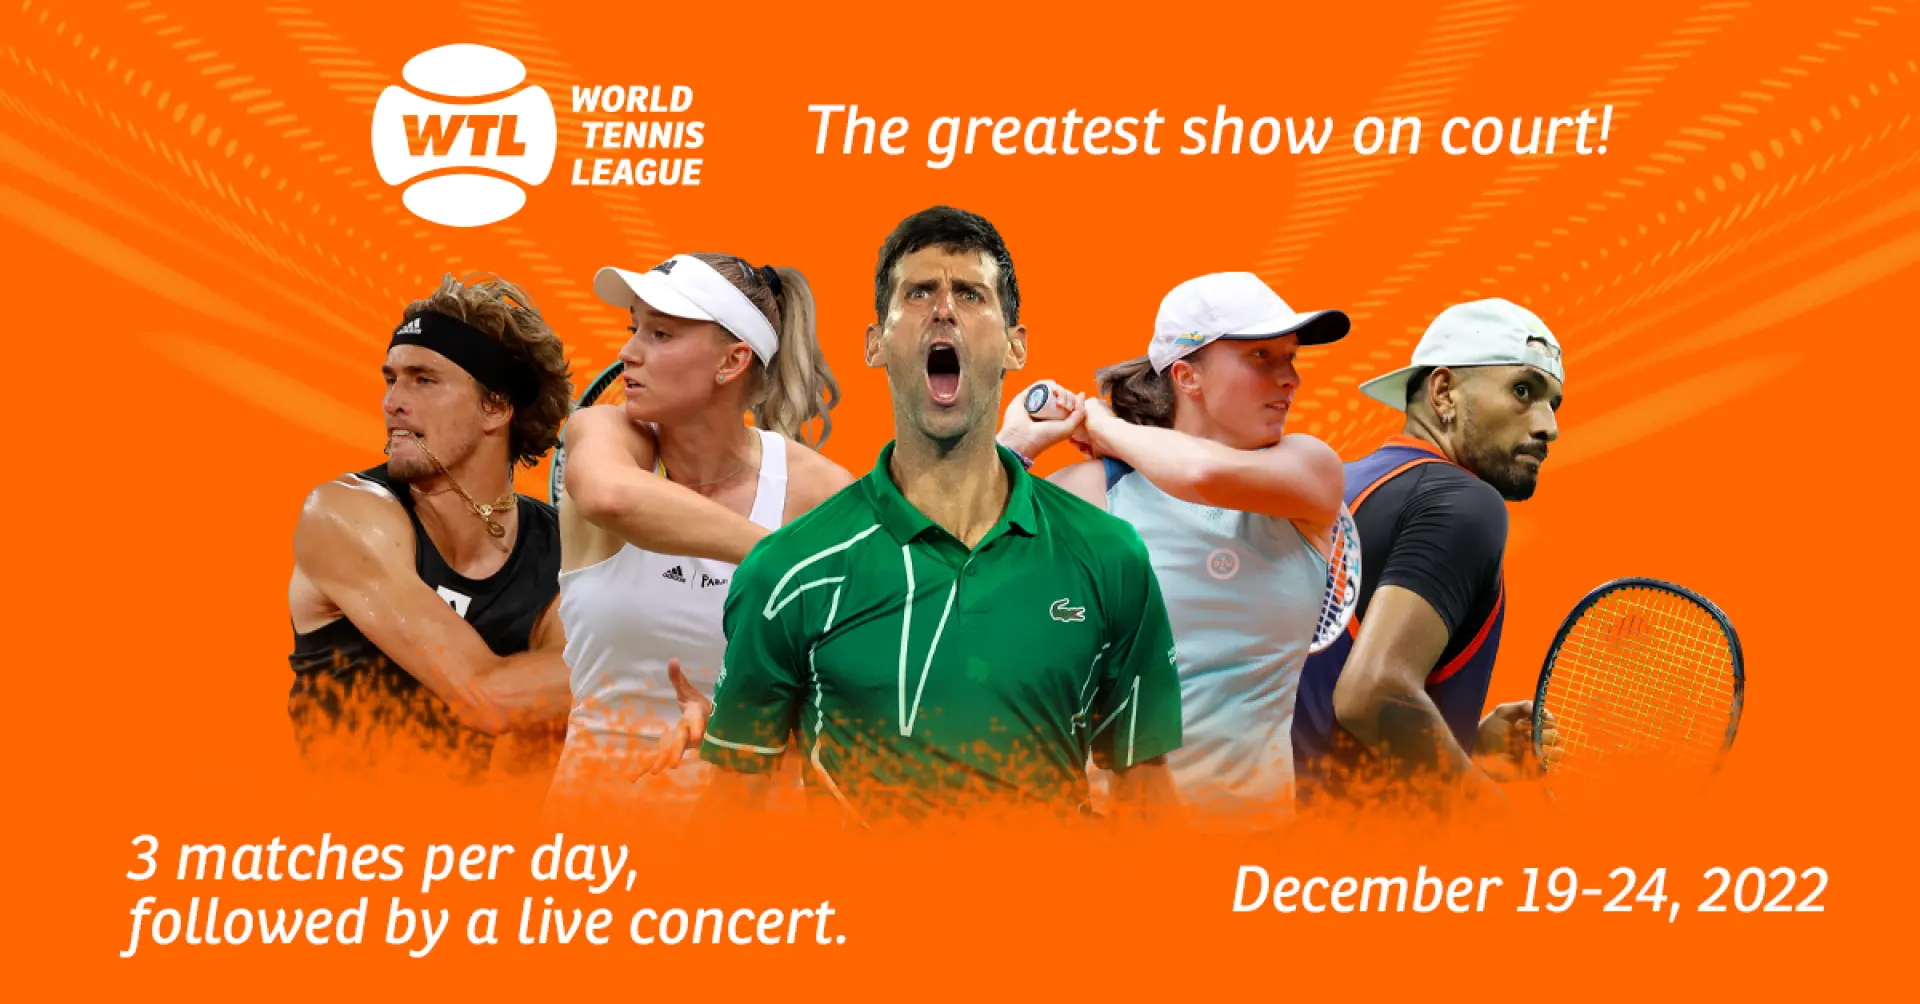 World Tennis League 2022 - Sport Event in Dubai UAE